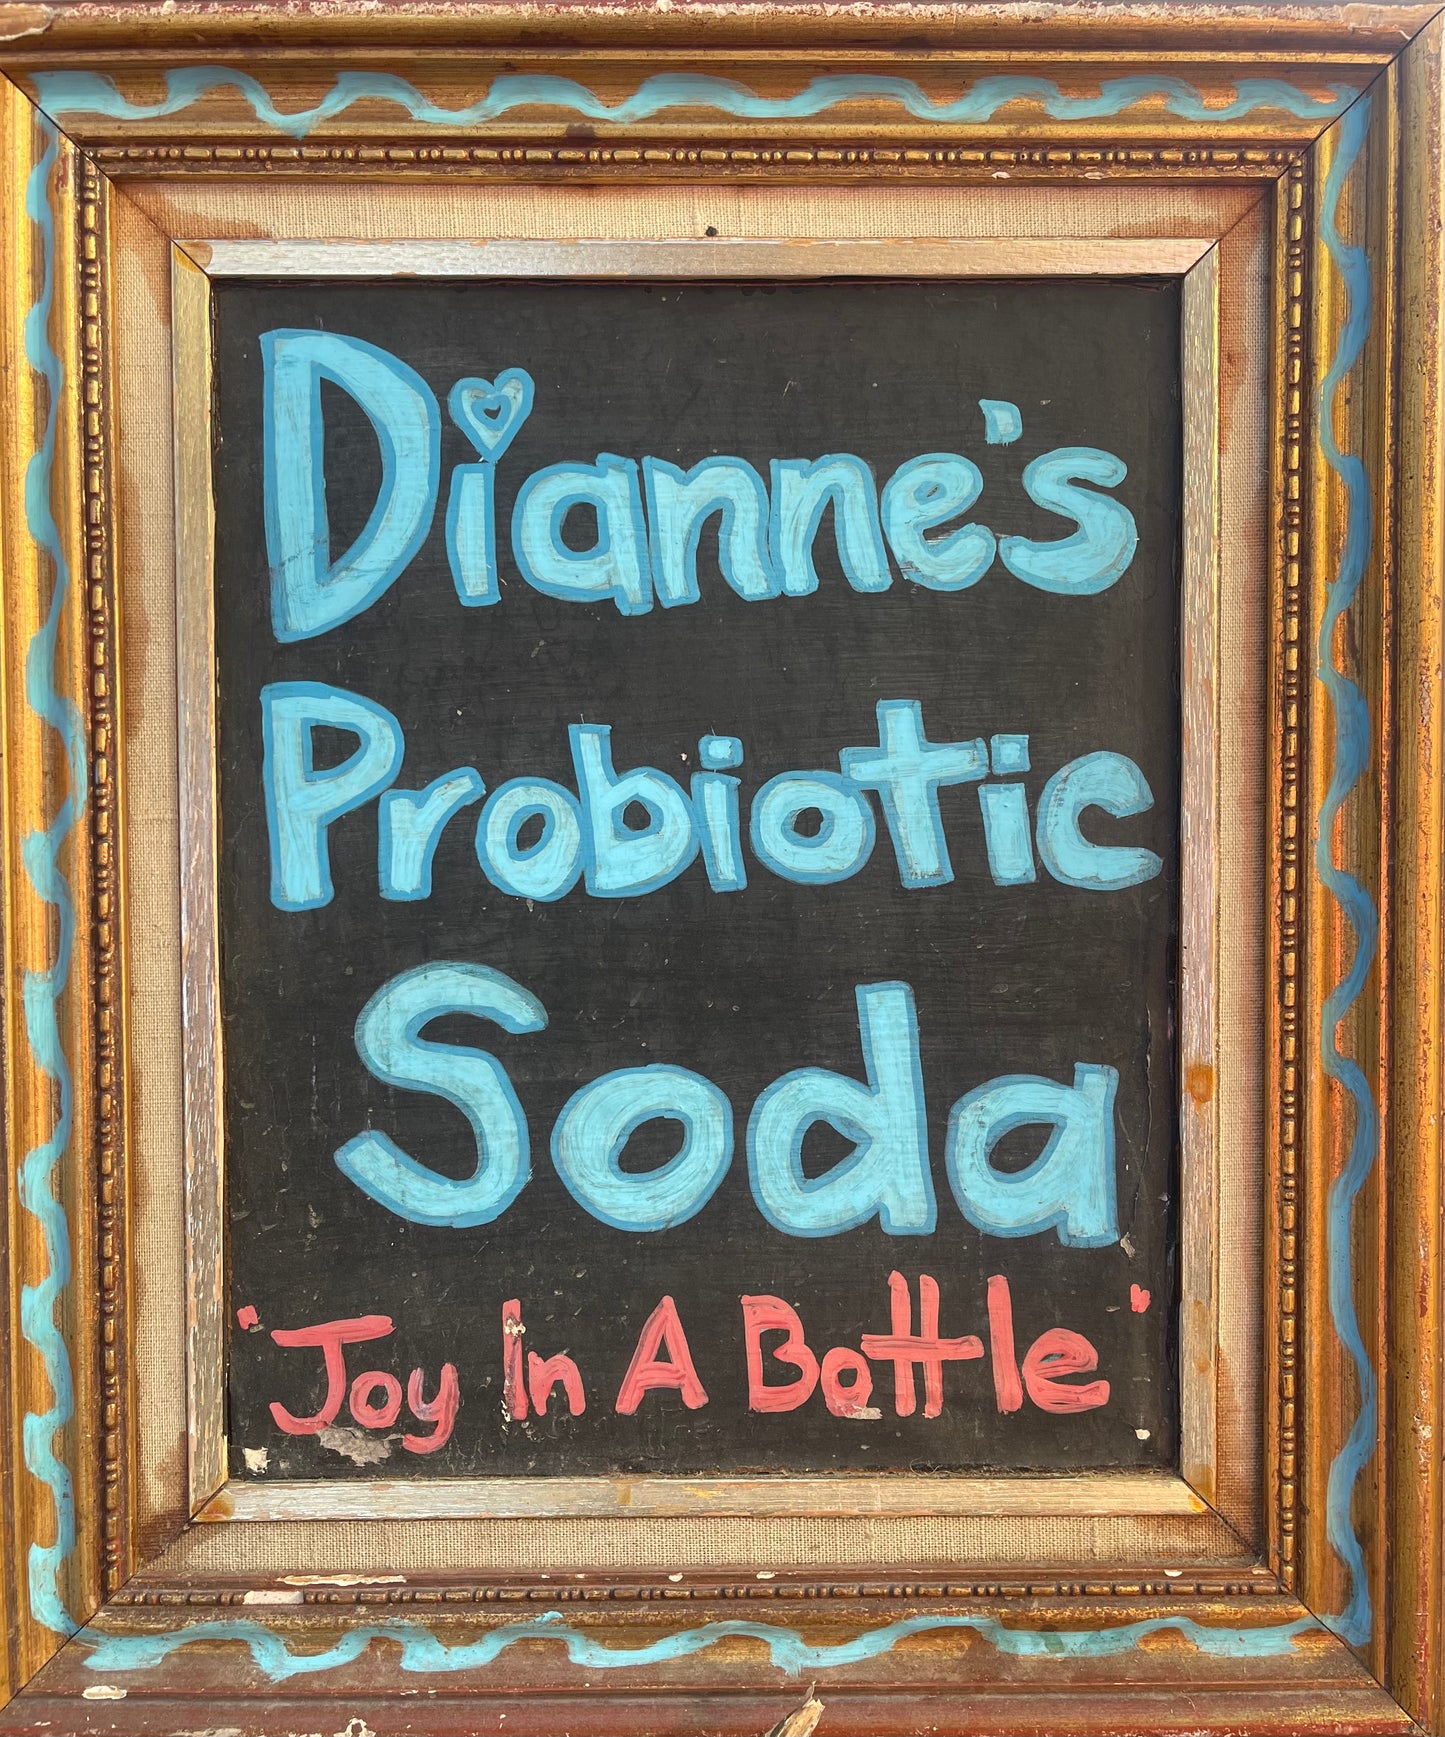 Di’s Living Probiotic Soda